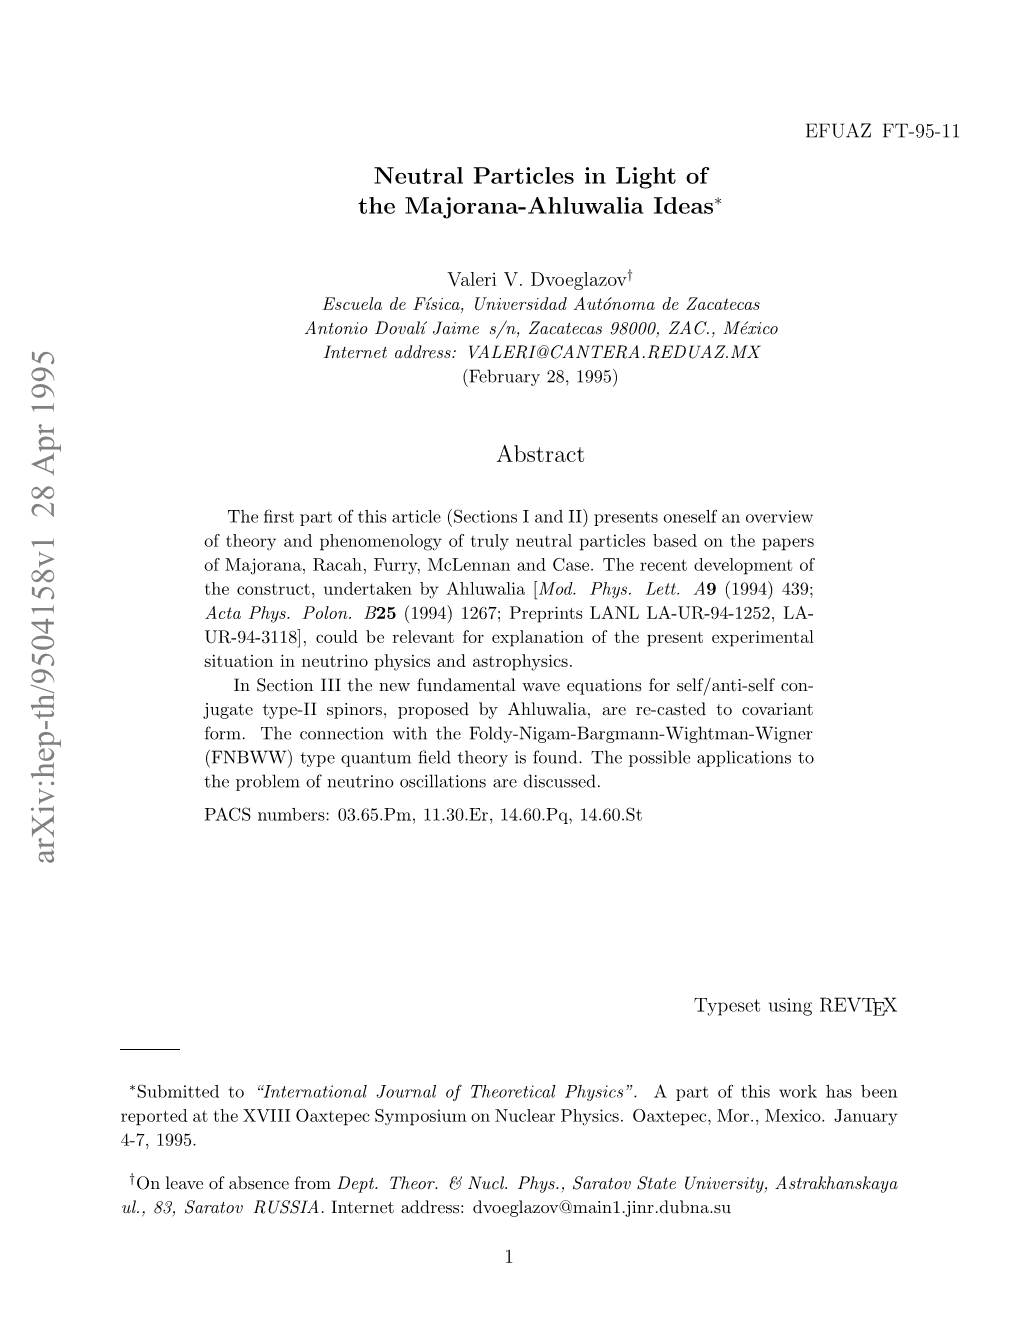 Neutral Particles in Light of the Majorana-Ahluwalia Ideas